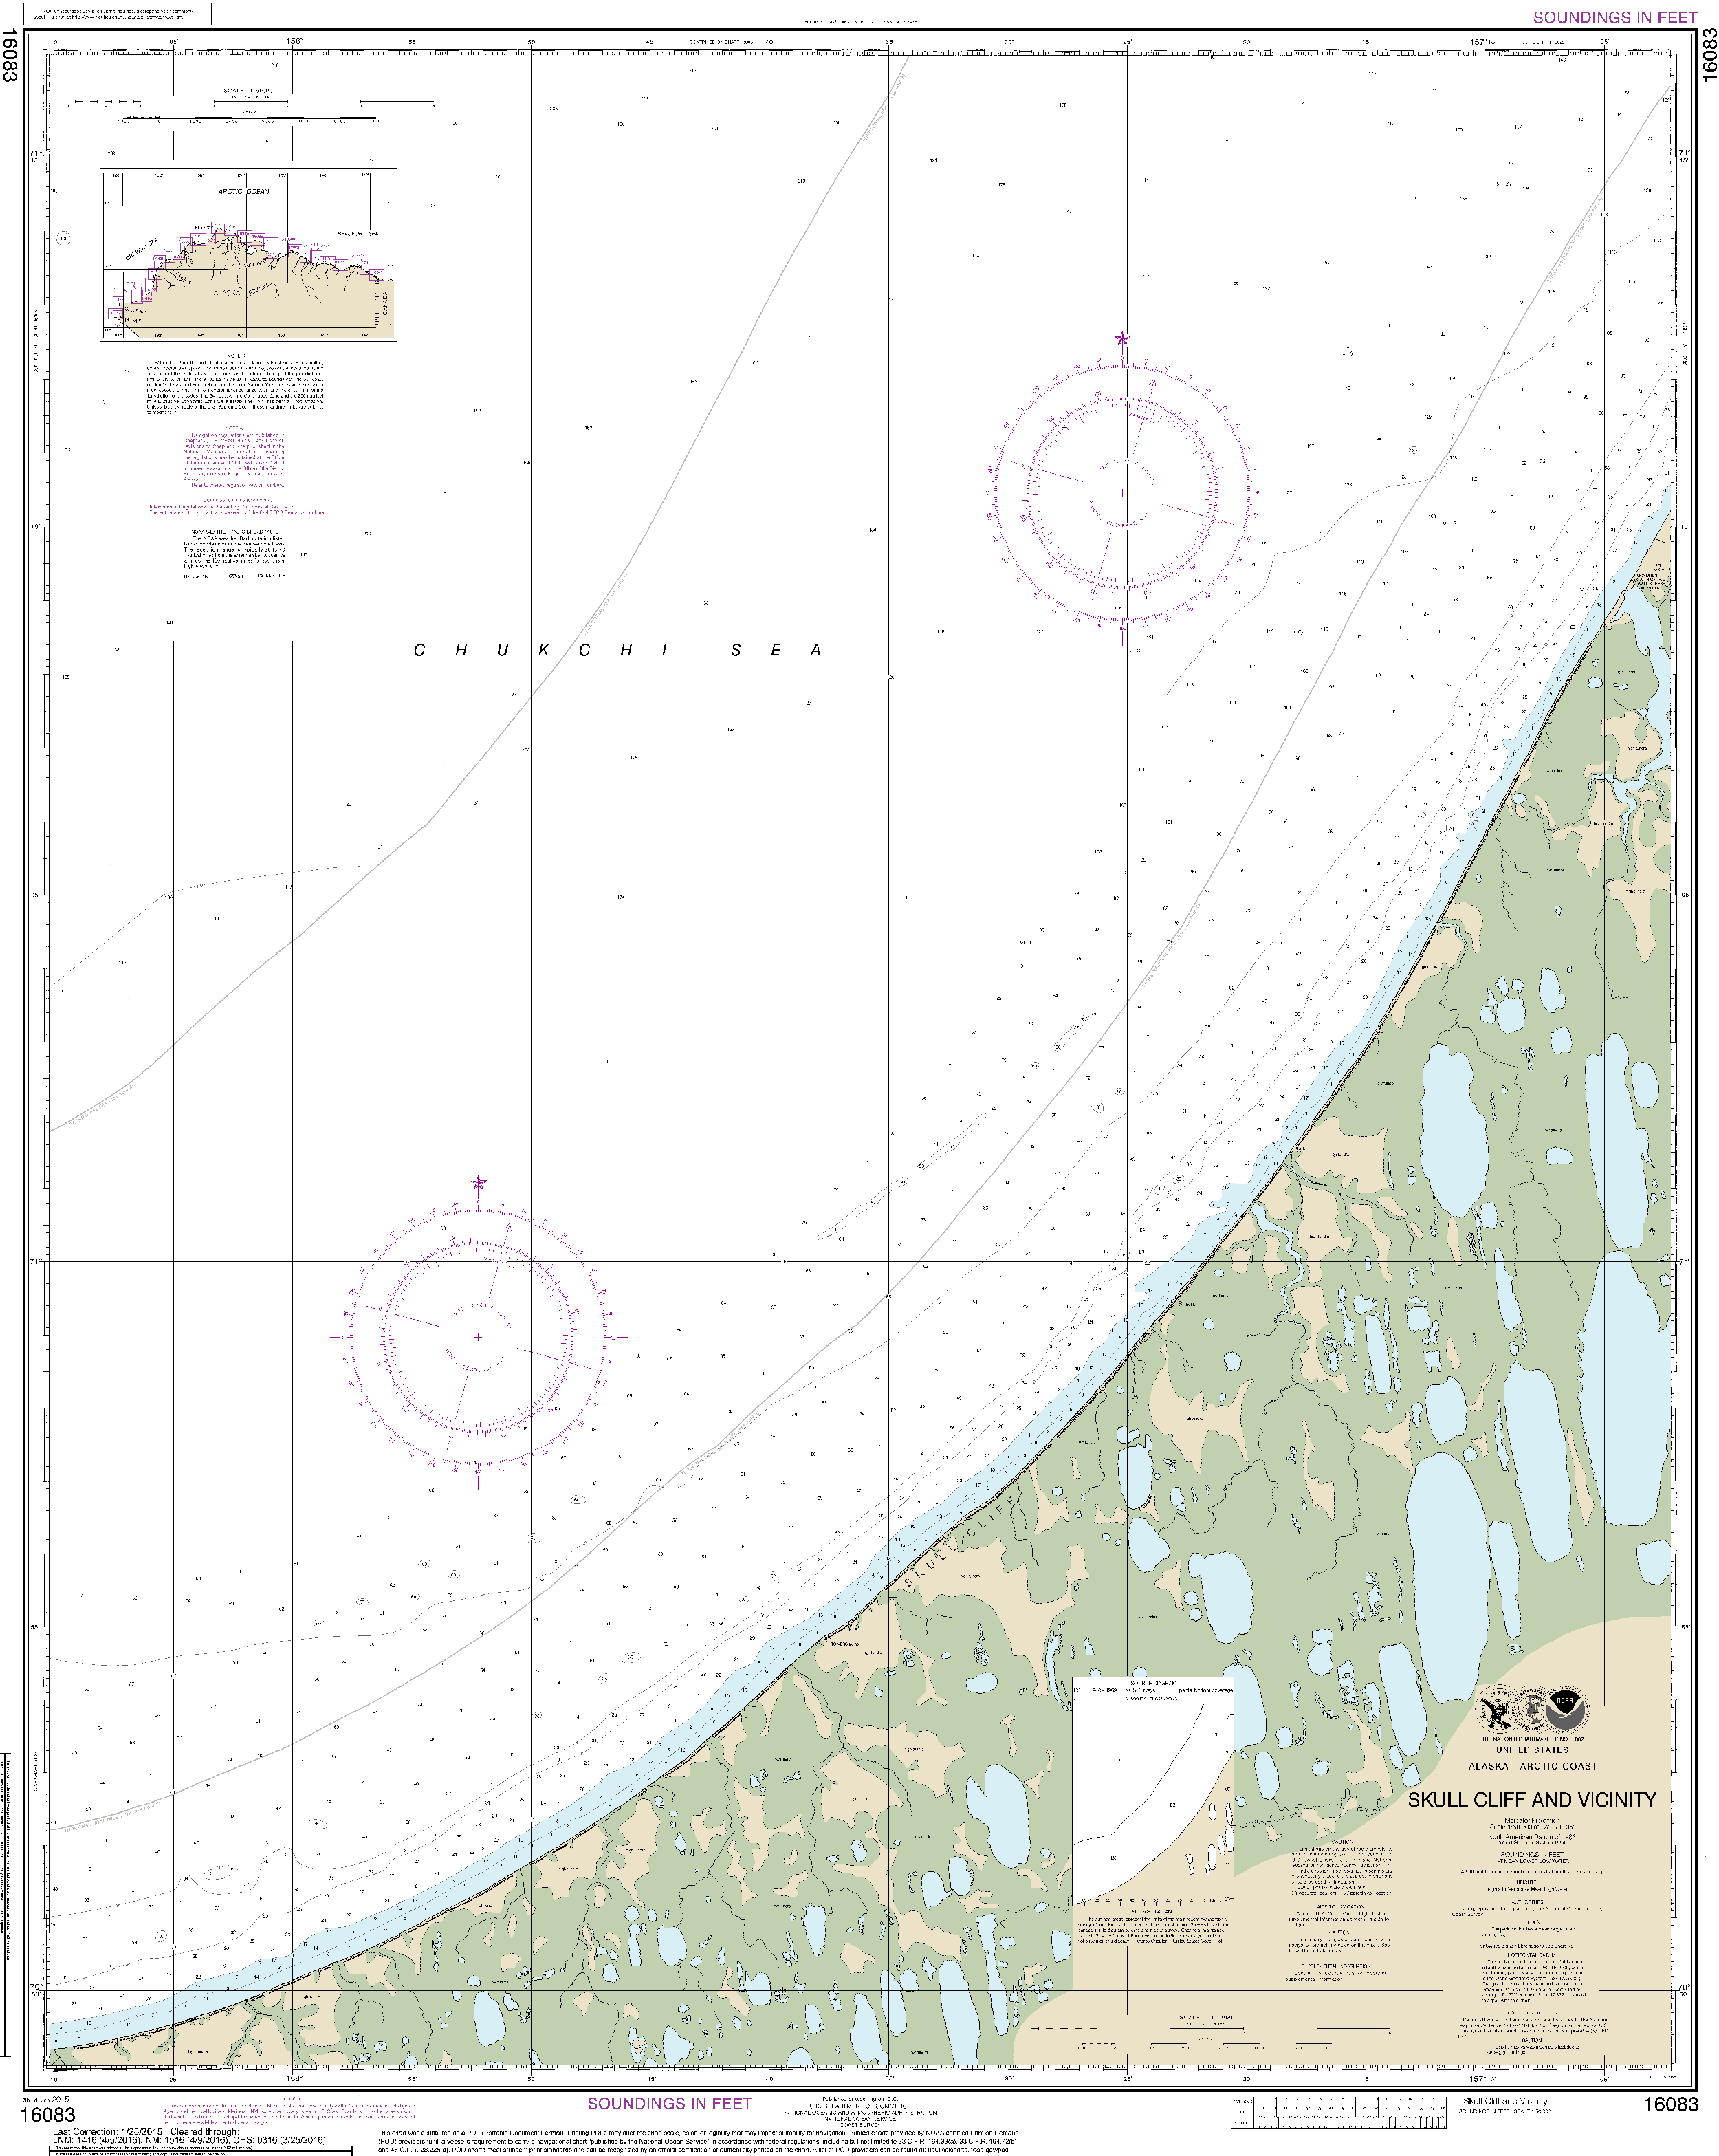 NOAA Nautical Chart 16083: Skull Cliff and vicinity